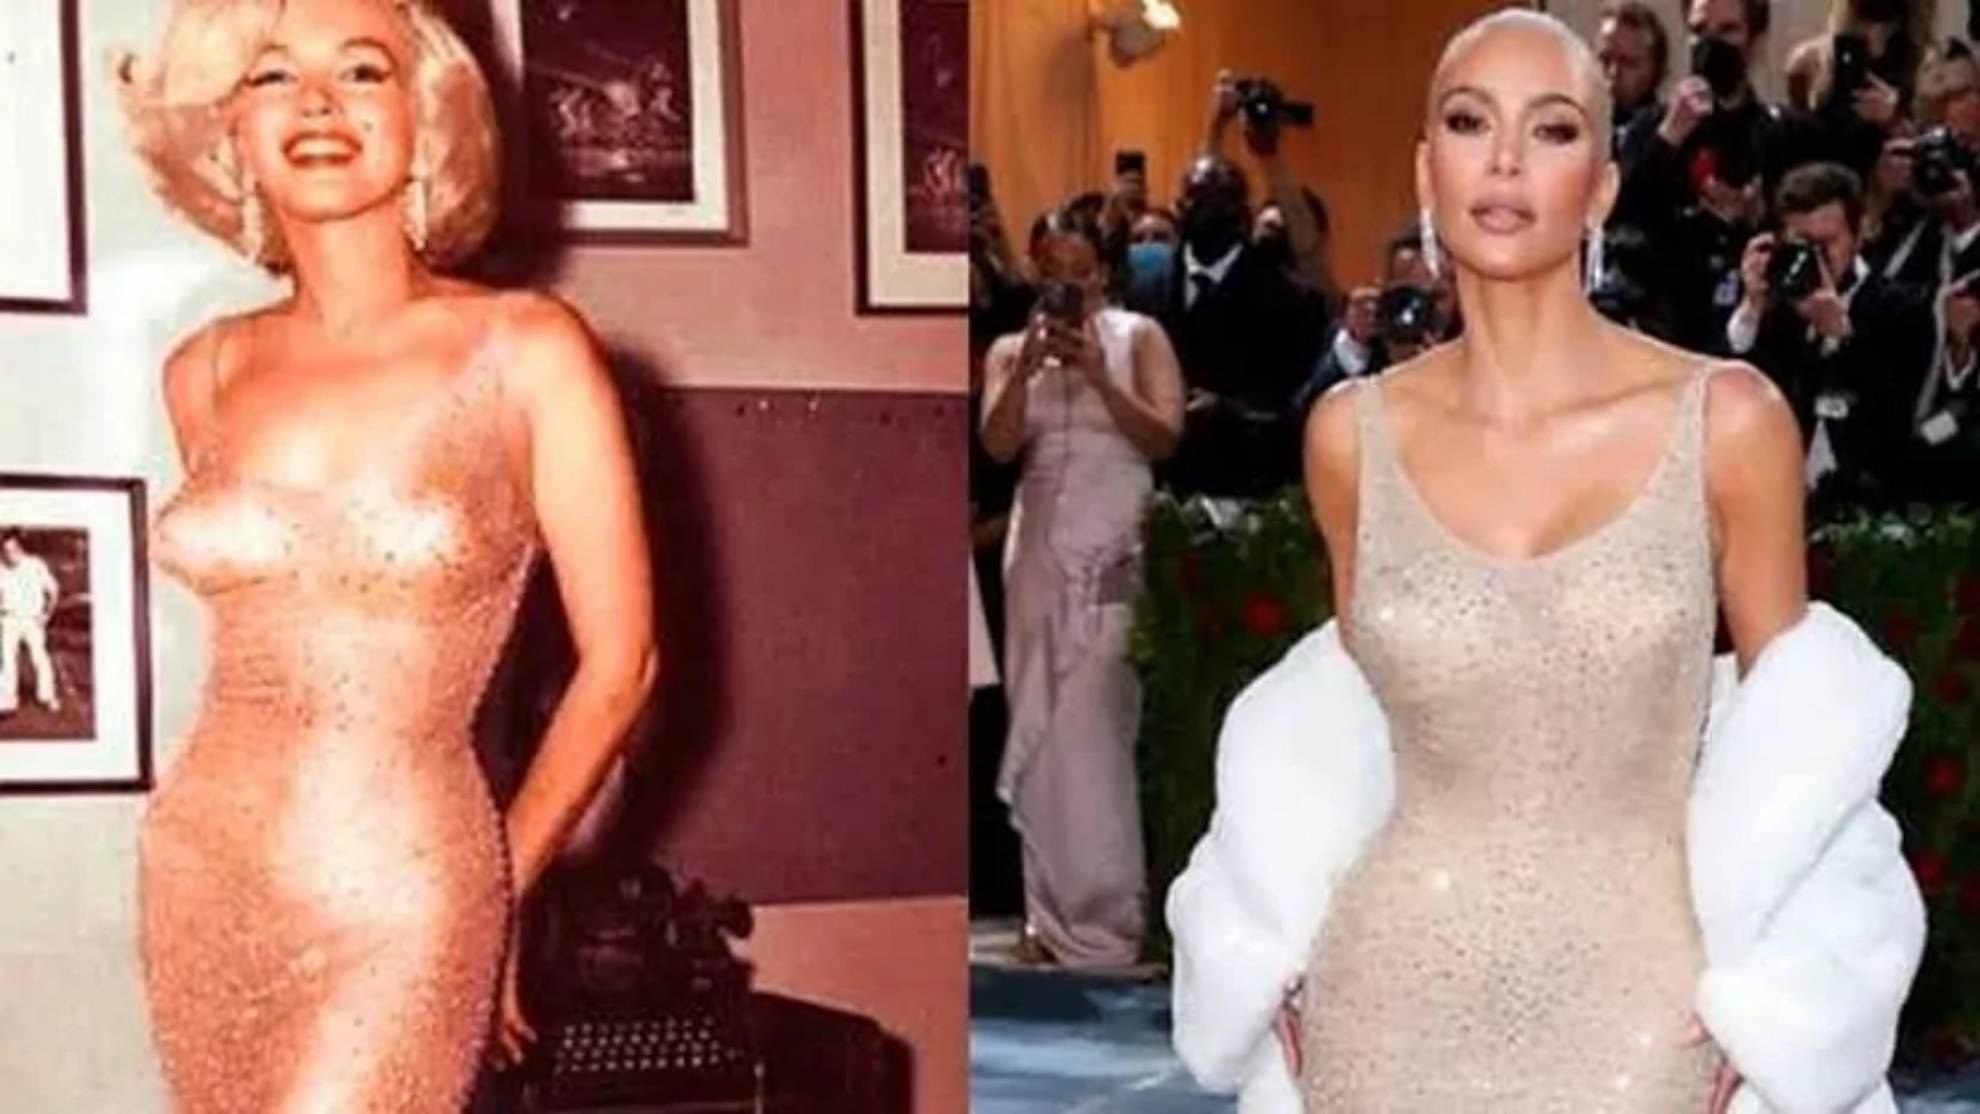 The sad story behind the Marilyn Monroe dress worn by Kim